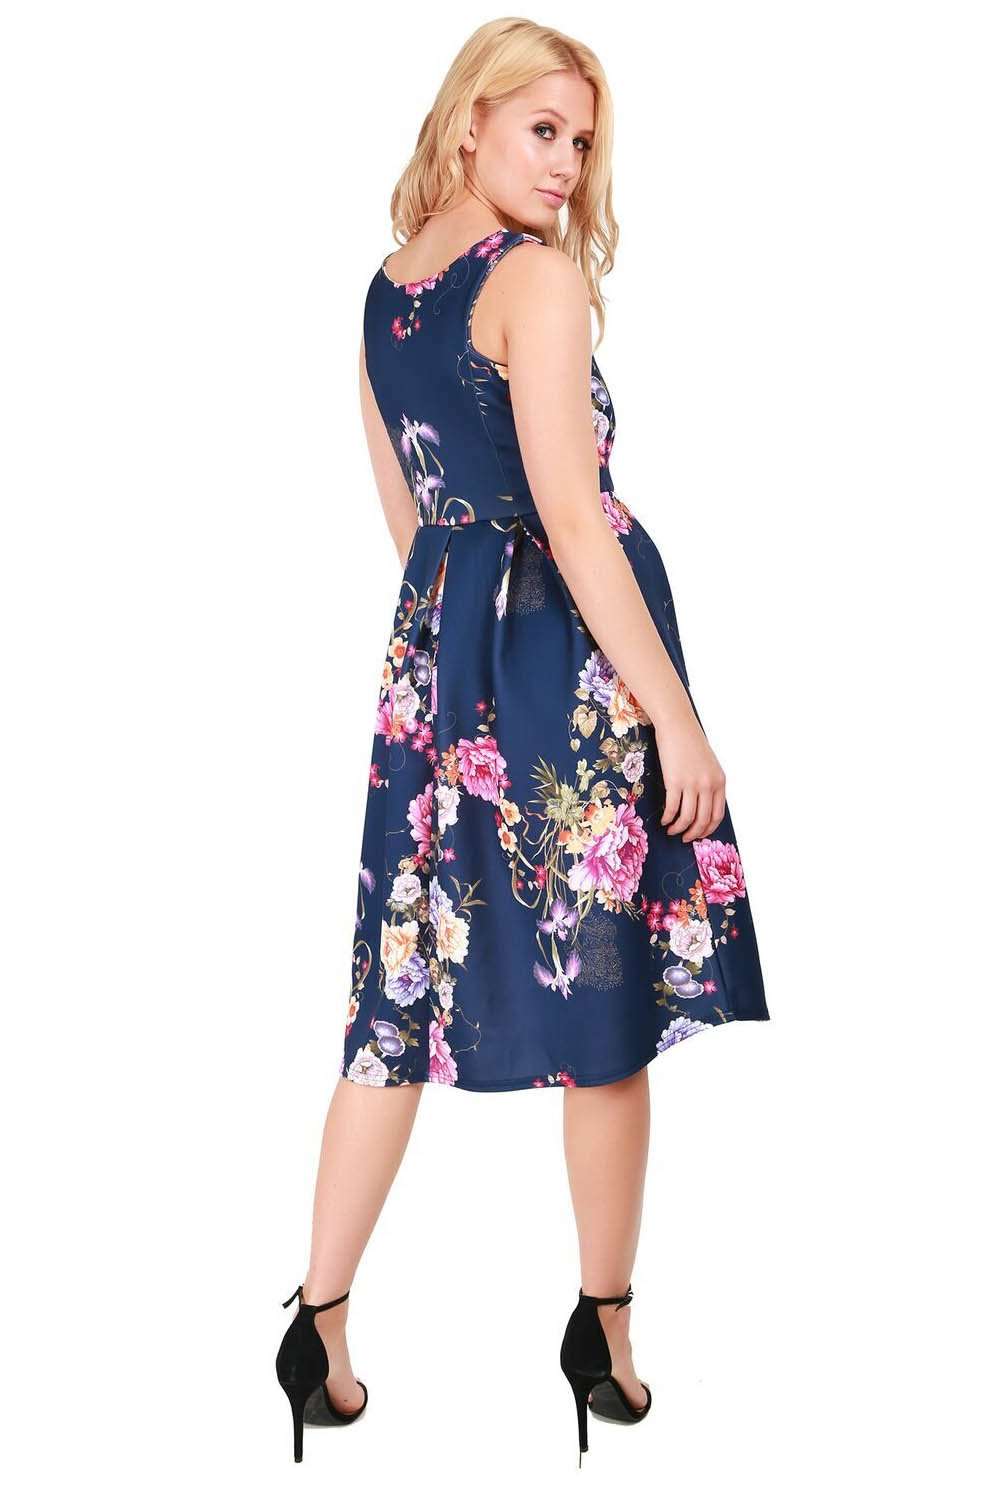 Sleeveless Navy Floral Pleated Midi Skater Dress - bejealous-com